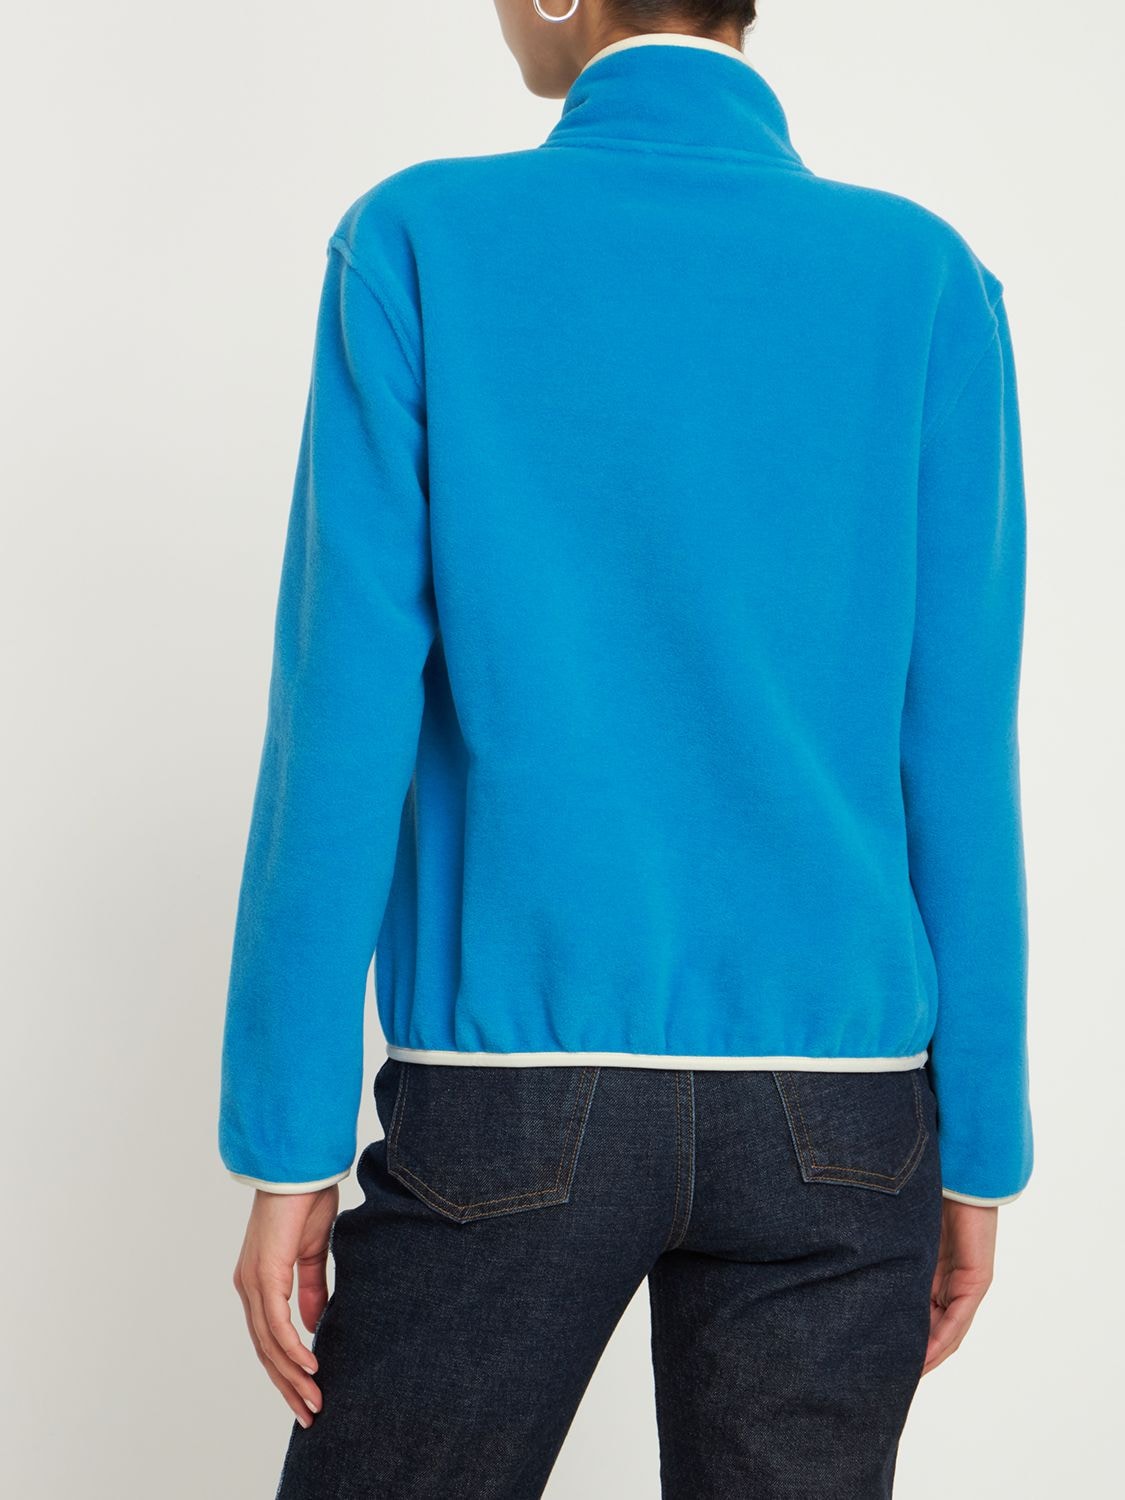 Shop Sporty And Rich Serif Logo Polar Fleece Sweatshirt In Blue